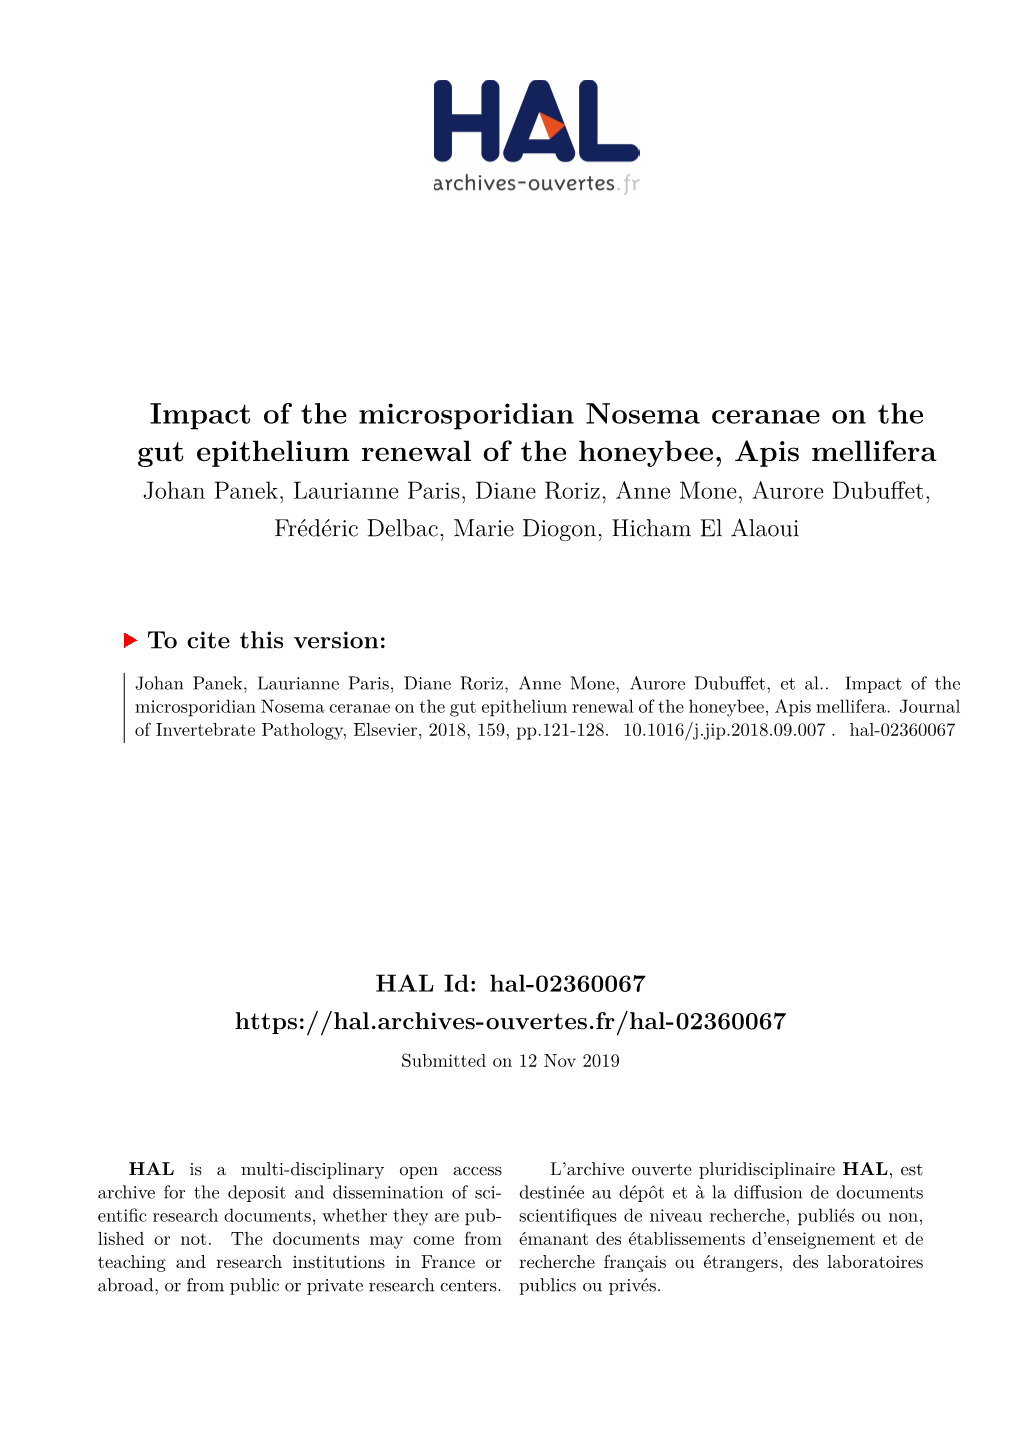 Impact of the Microsporidian Nosema Ceranae on the Gut Epithelium